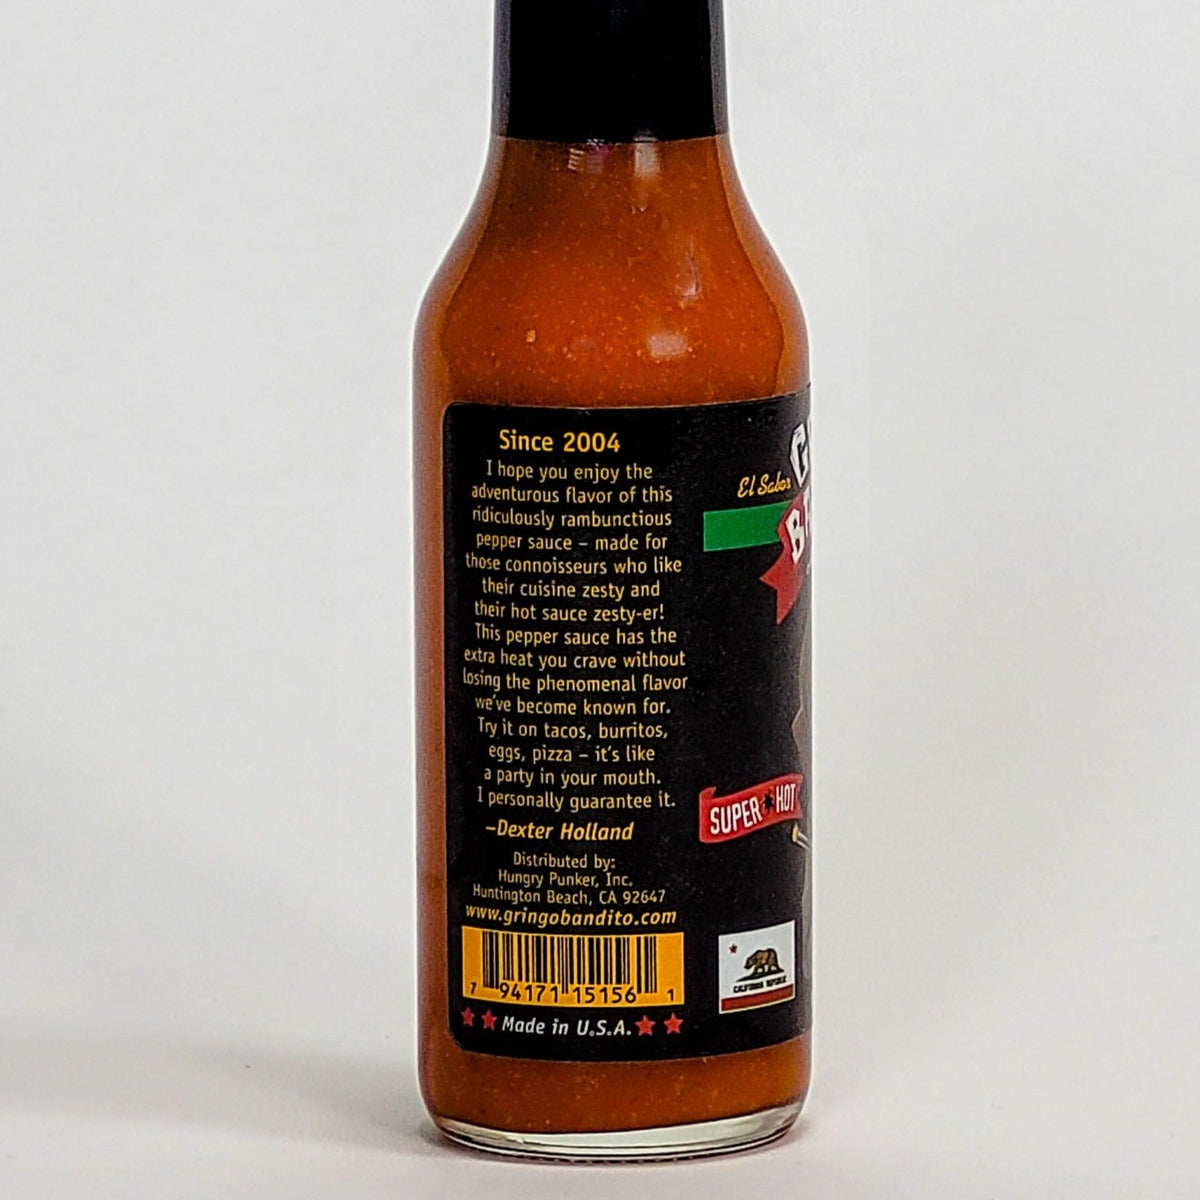 gringo bandito super hot hot sauce label description